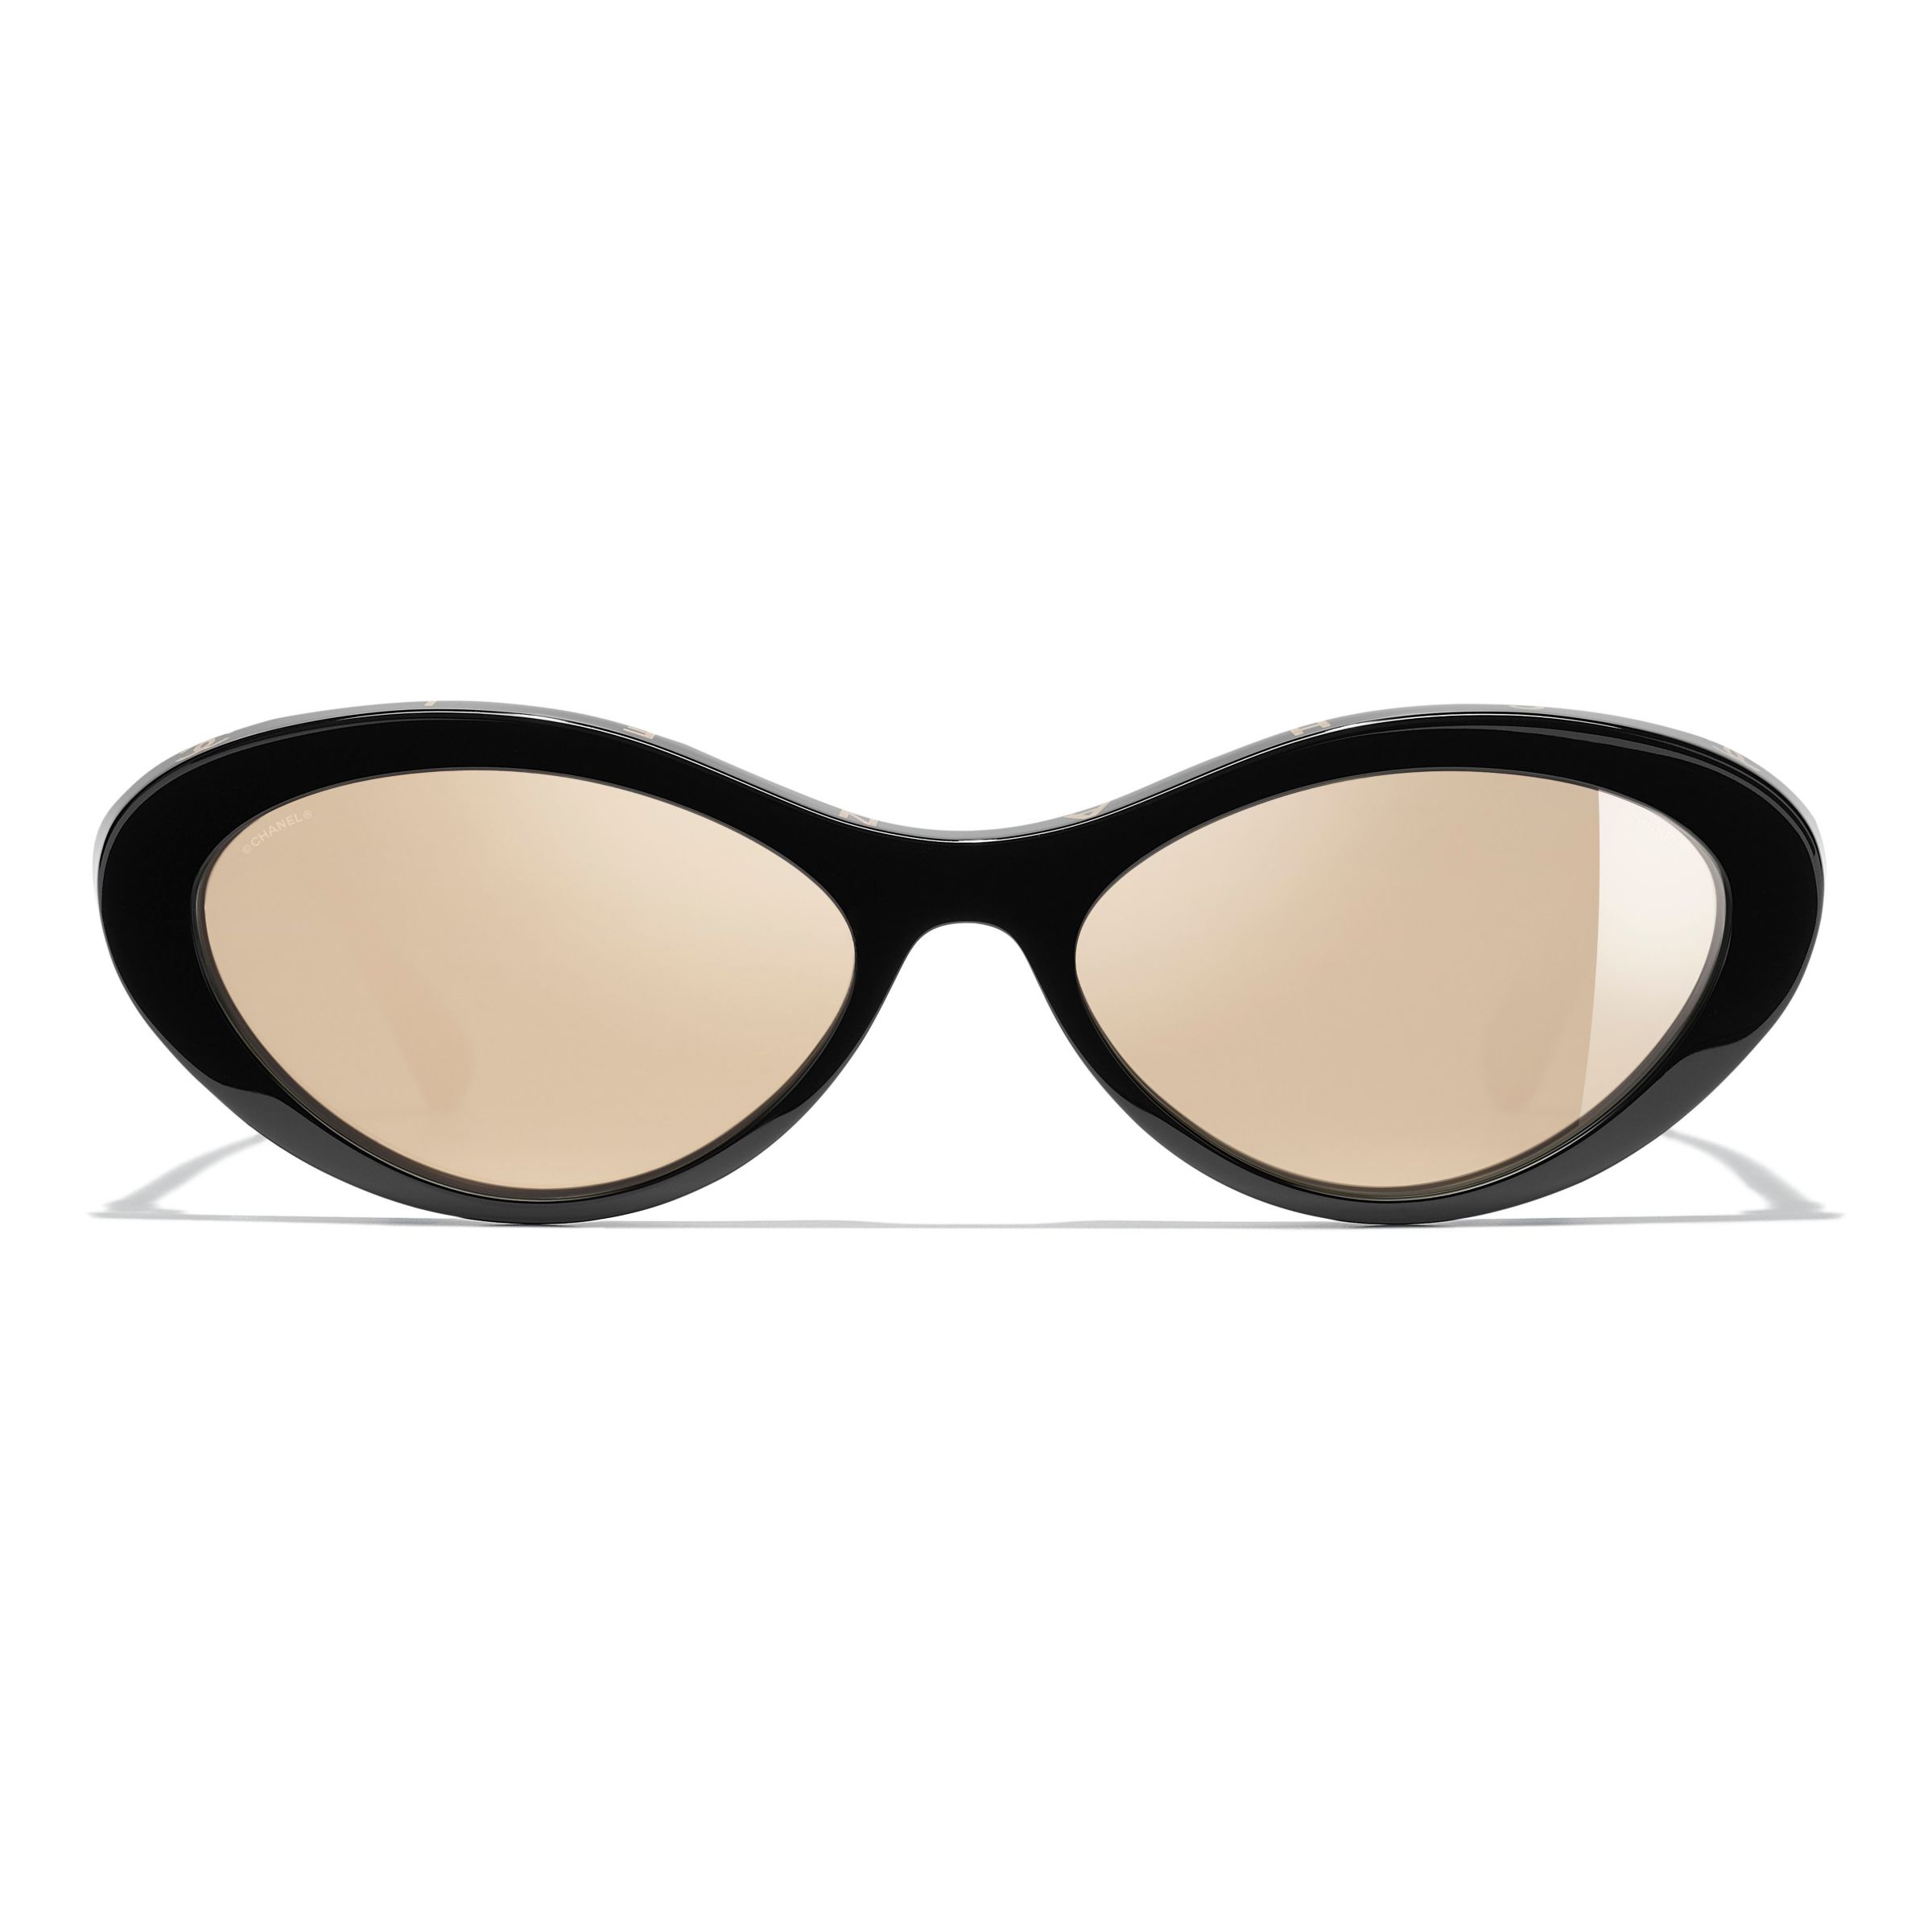 CHANEL Oval Sunglasses CH5416 Polished Black/Beige at John Lewis